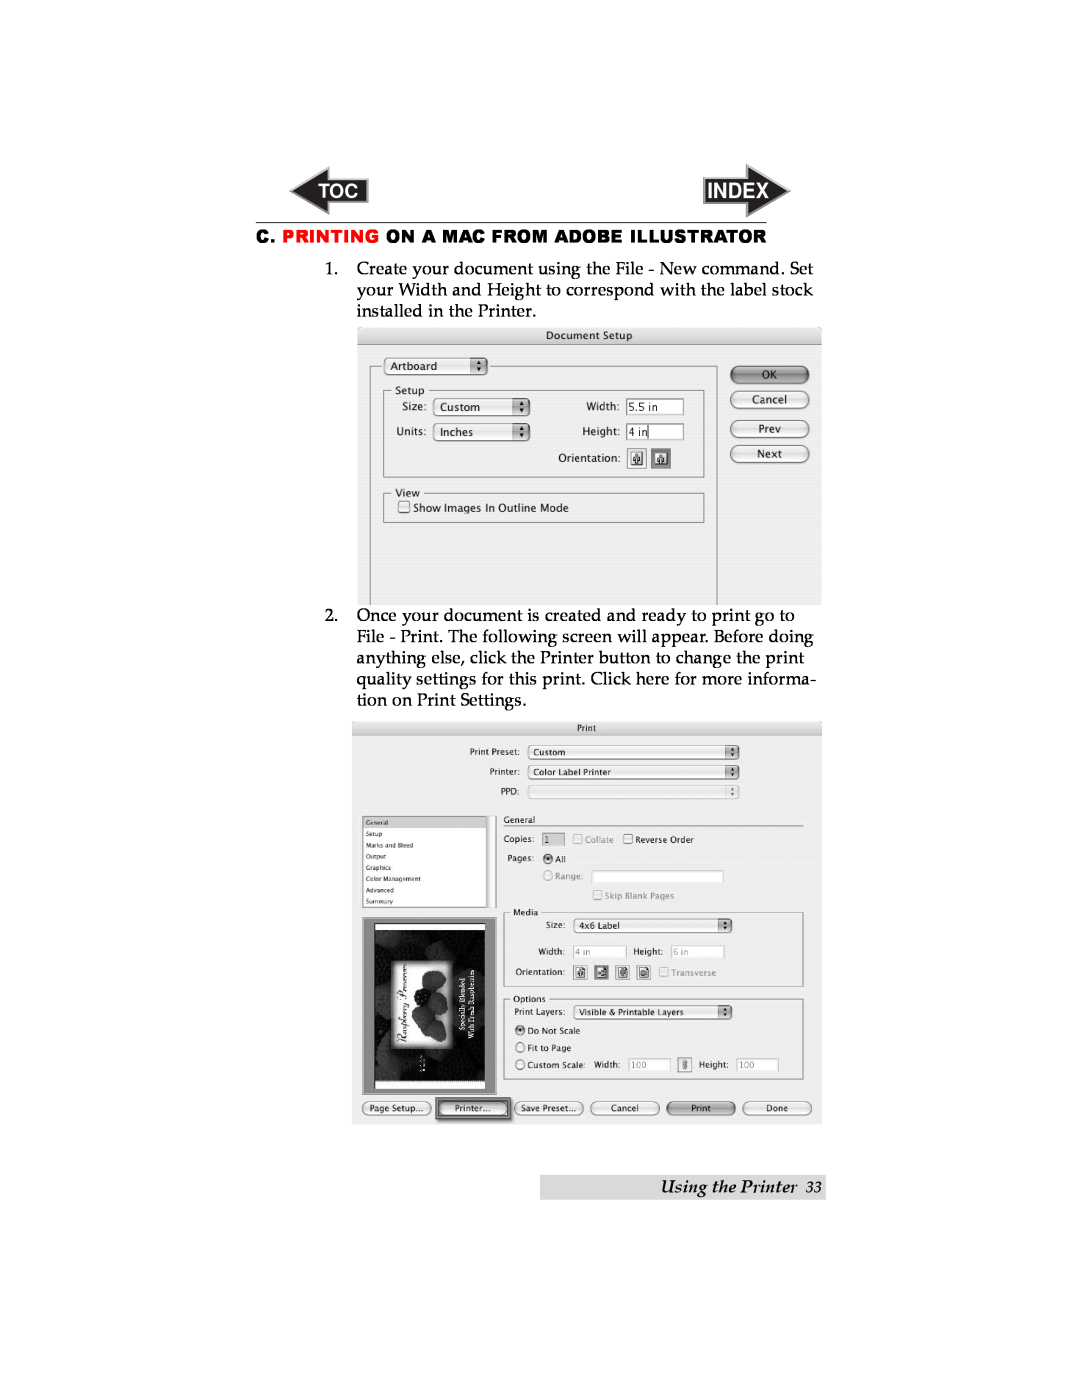 Primera Technology LX800 user manual Index, C. Printing On A Mac From Adobe Illustrator, Using the Printer 